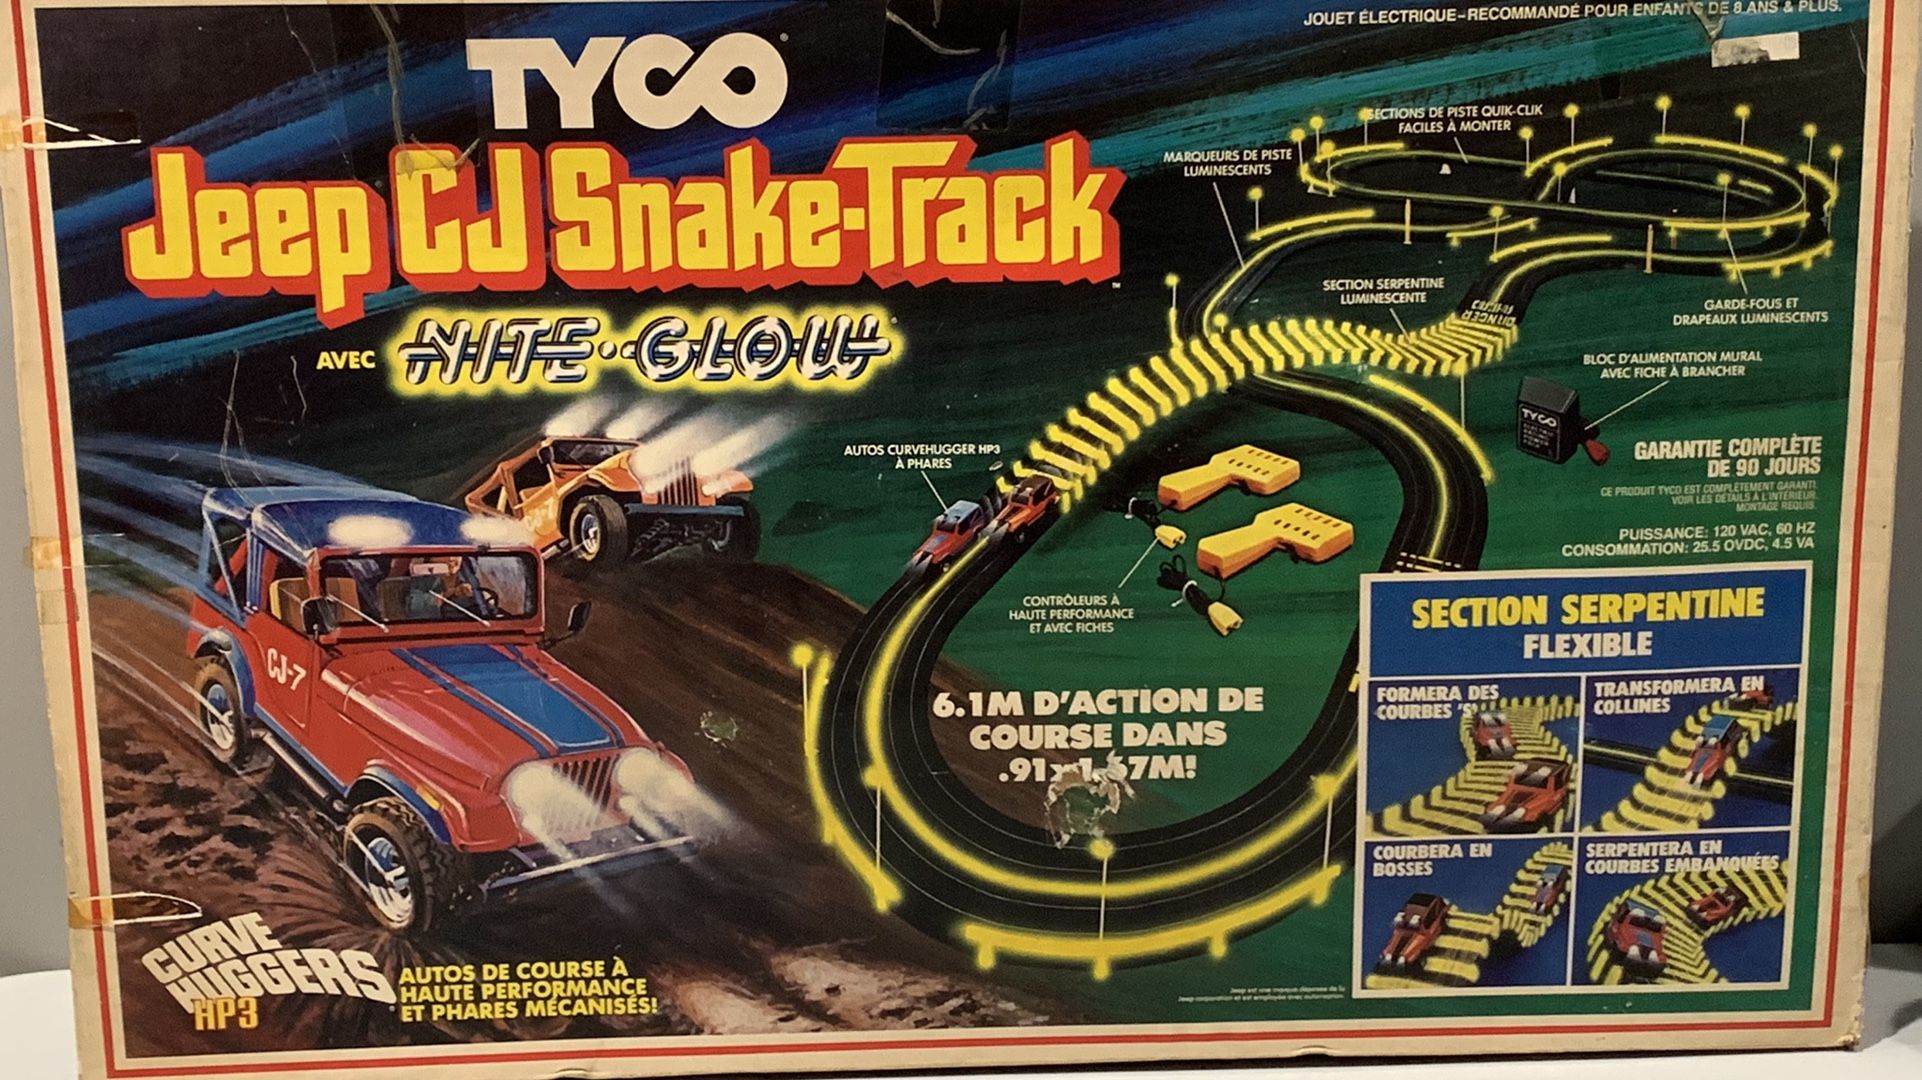 Original Tyco CJ Snake Track Toy